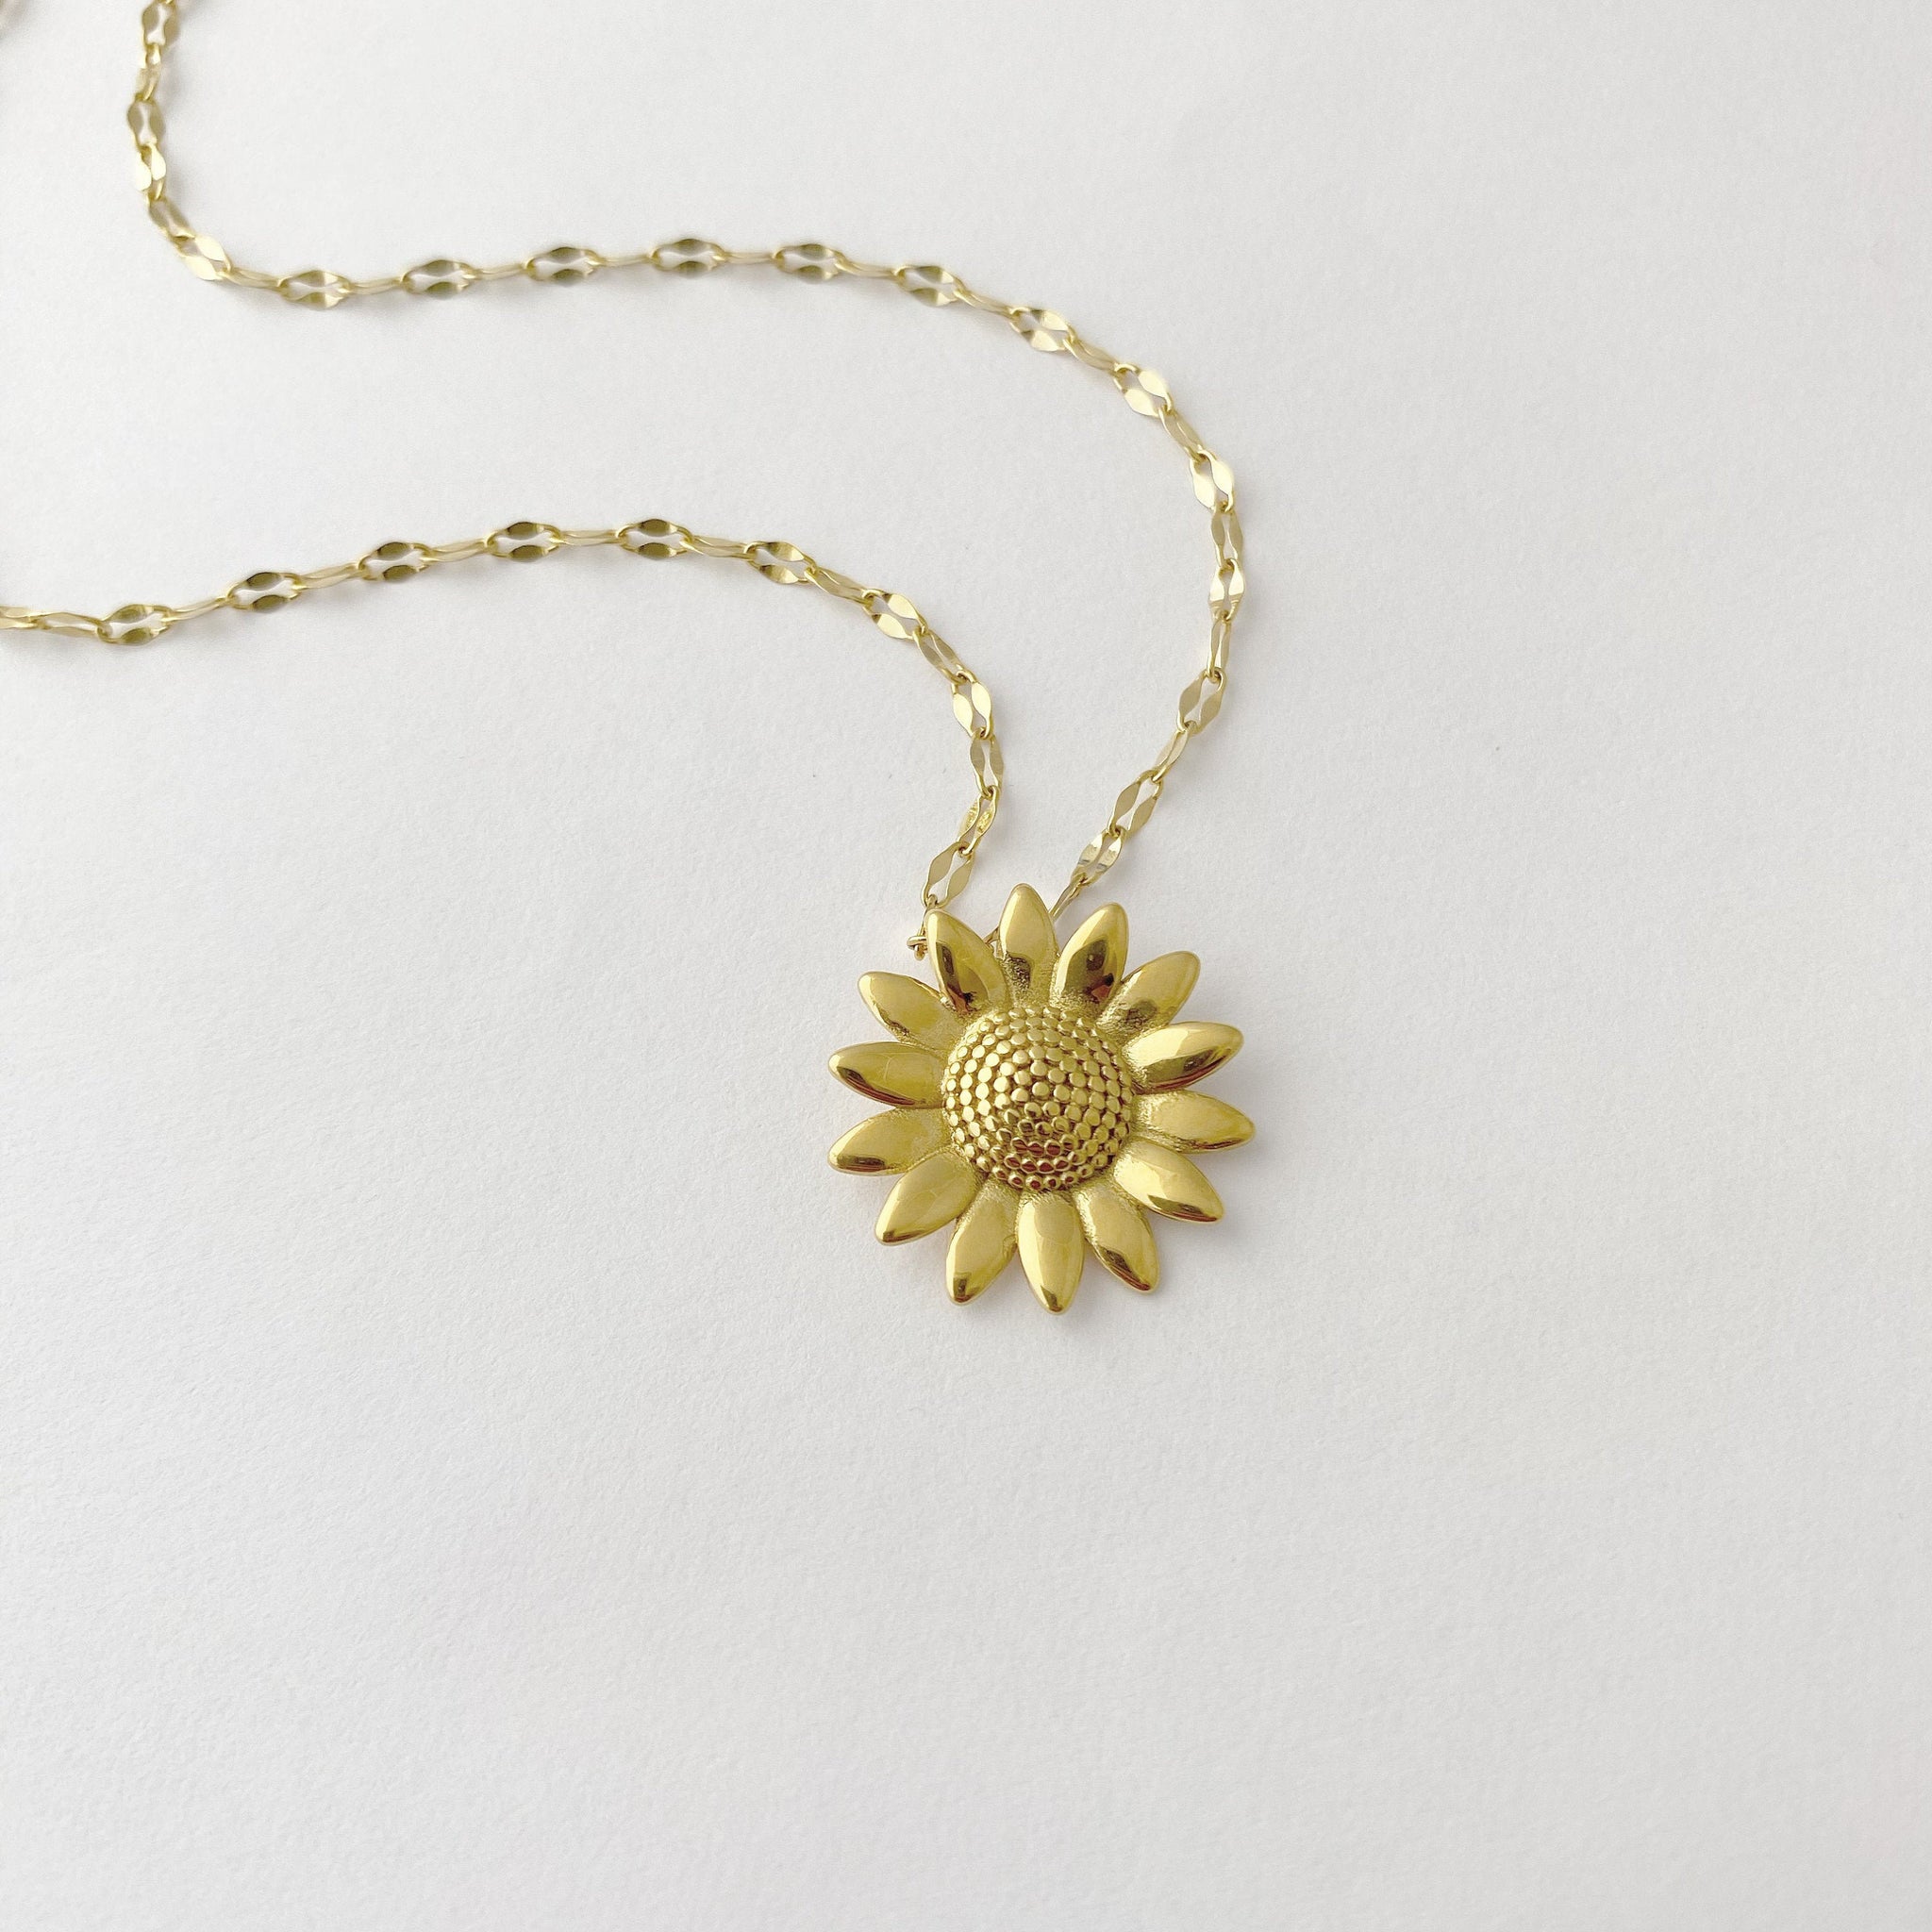 Buy Gold Sunflower Necklace Best Friend Birthday Gift Gold Sunflower Jewelry  Everyday Dainty Gold Necklace Sunflower Lover Jewelry Online in India - Etsy